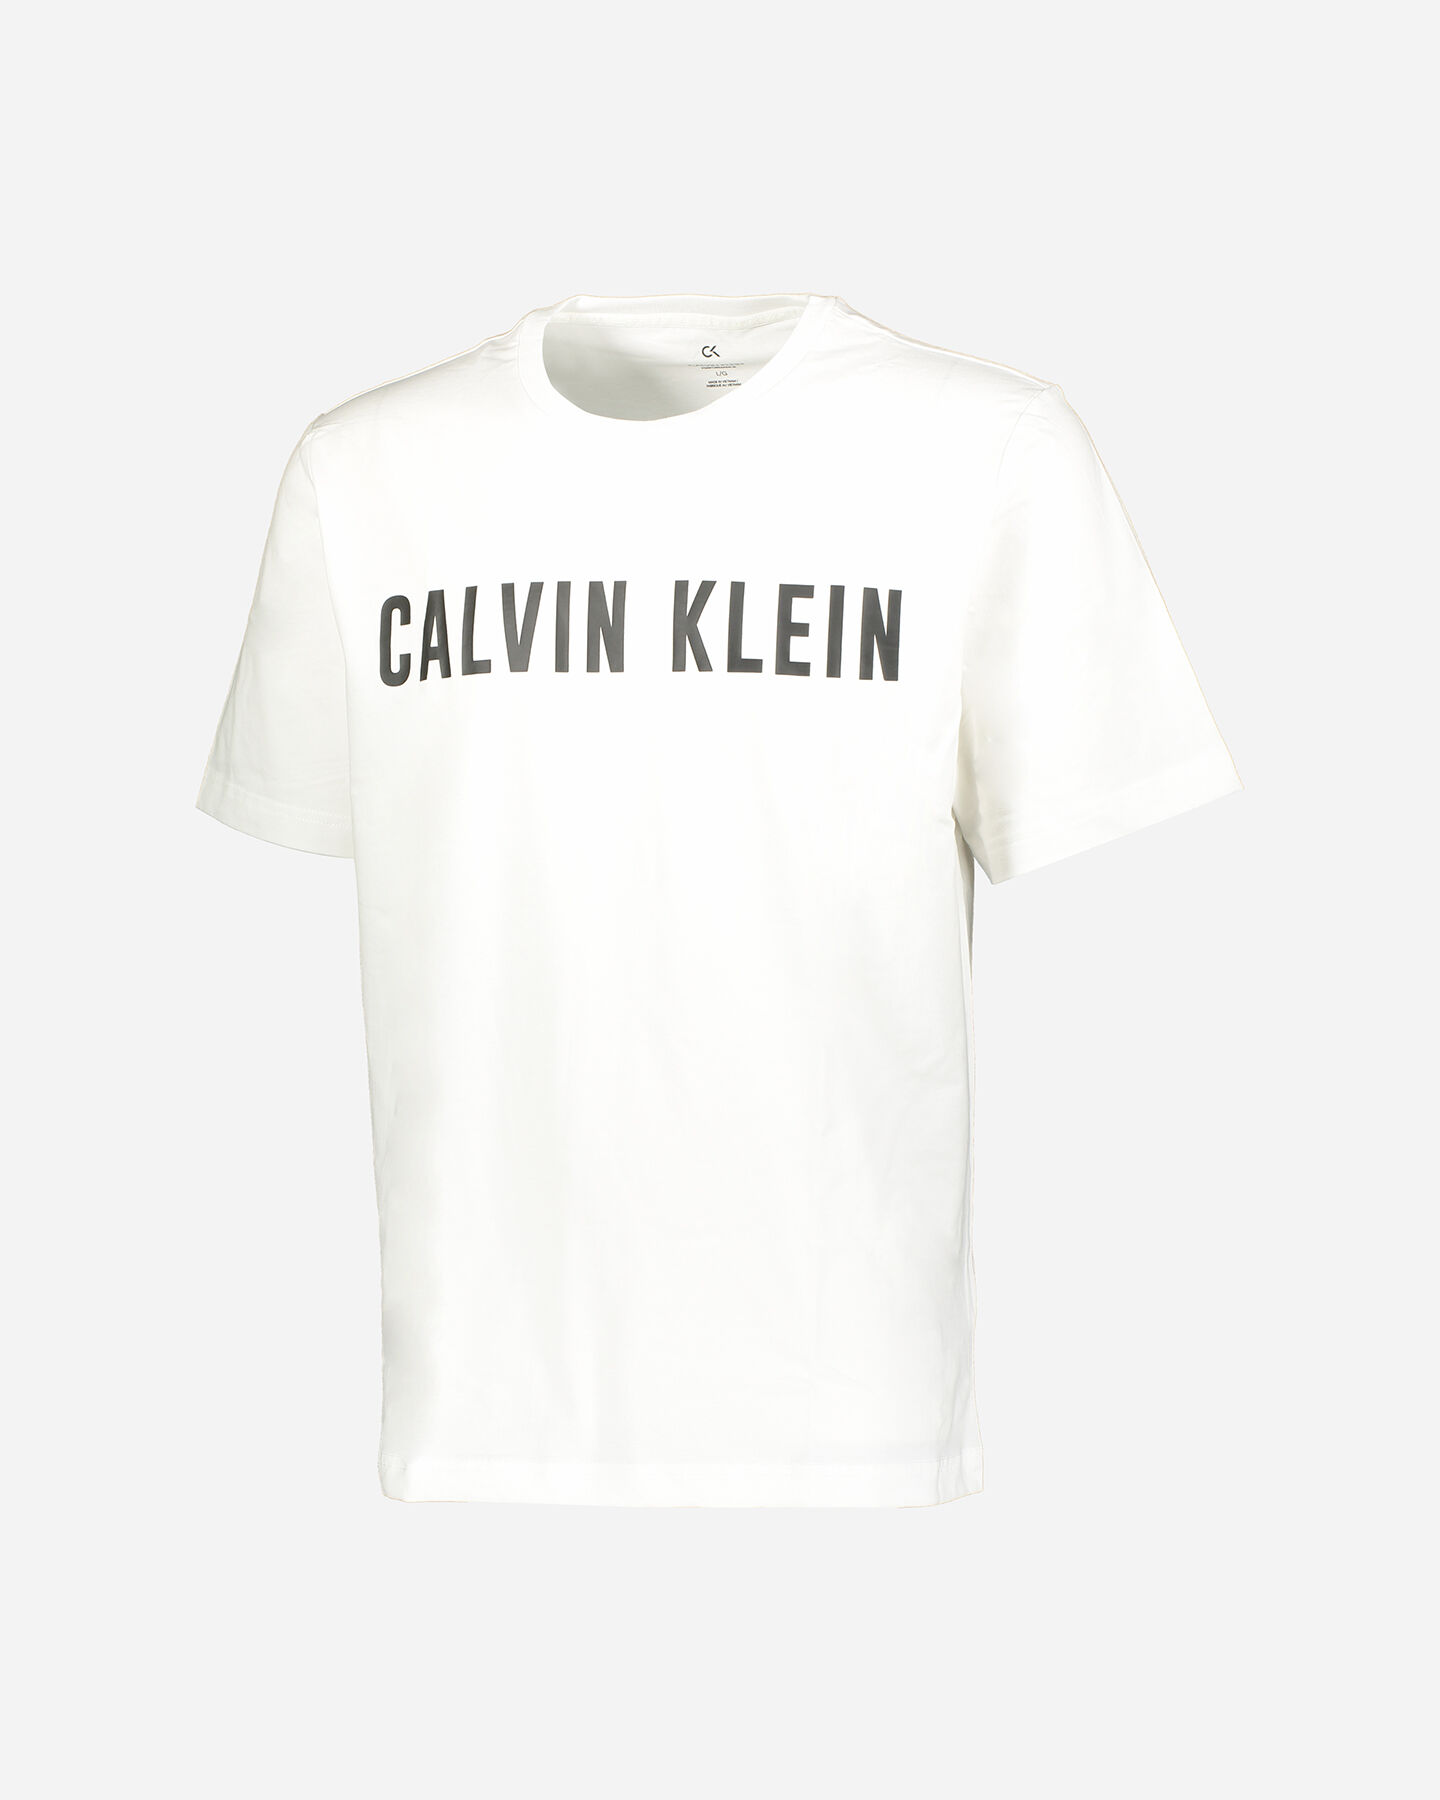  T-Shirt CALVIN KLEIN SPORT STATMENT M S4090781|100|S scatto 0